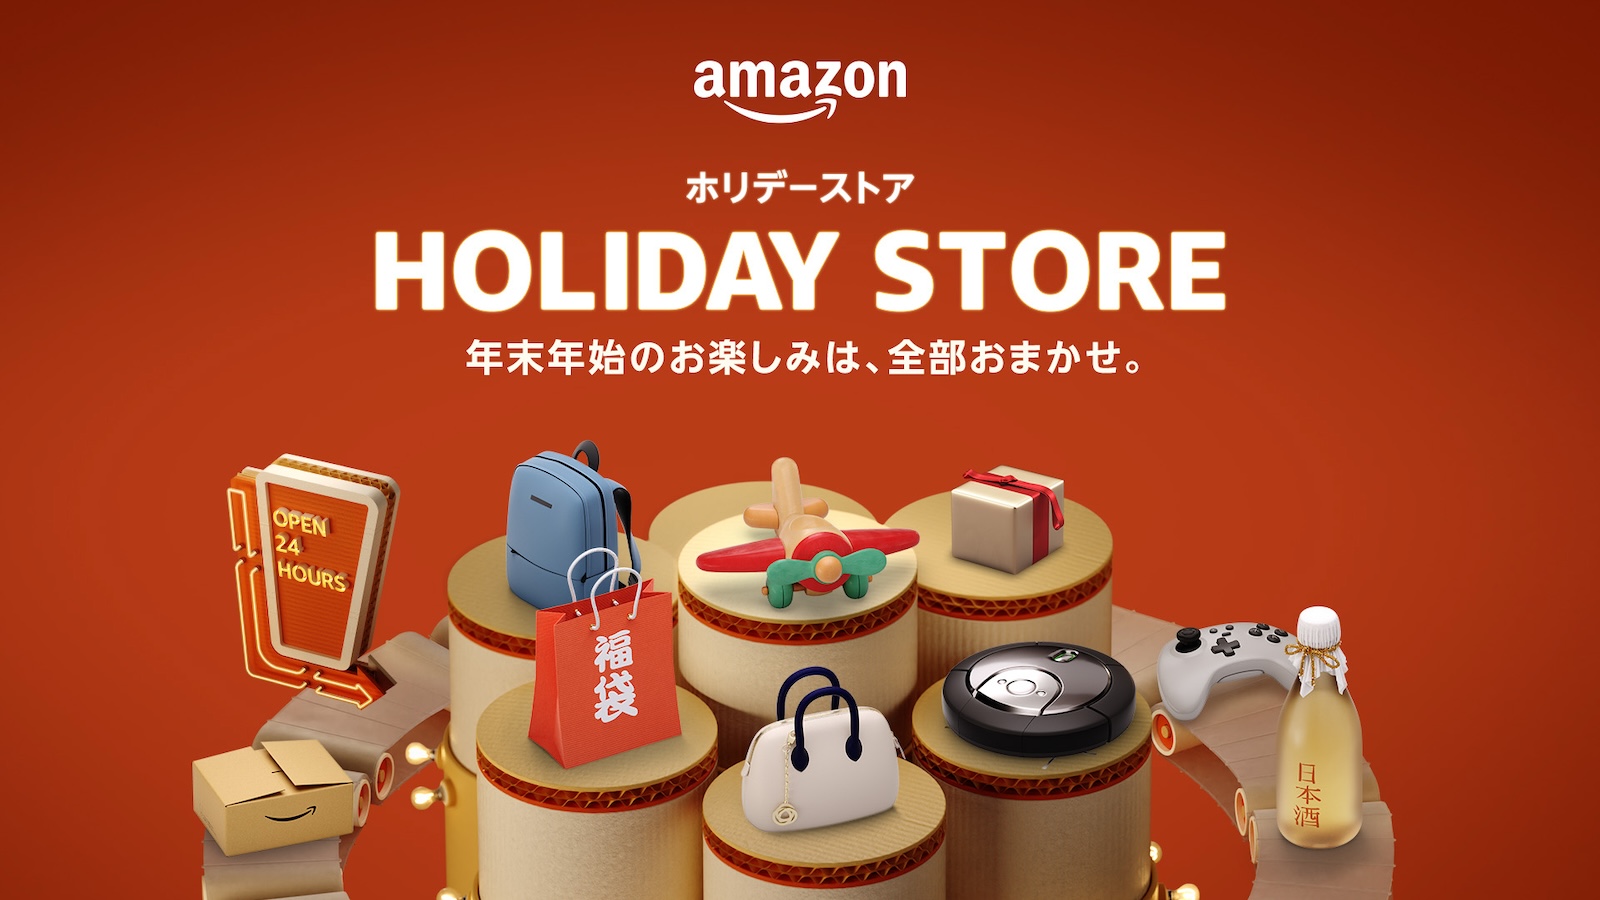 Amazon-Holiday-Store-has-opened.jpg